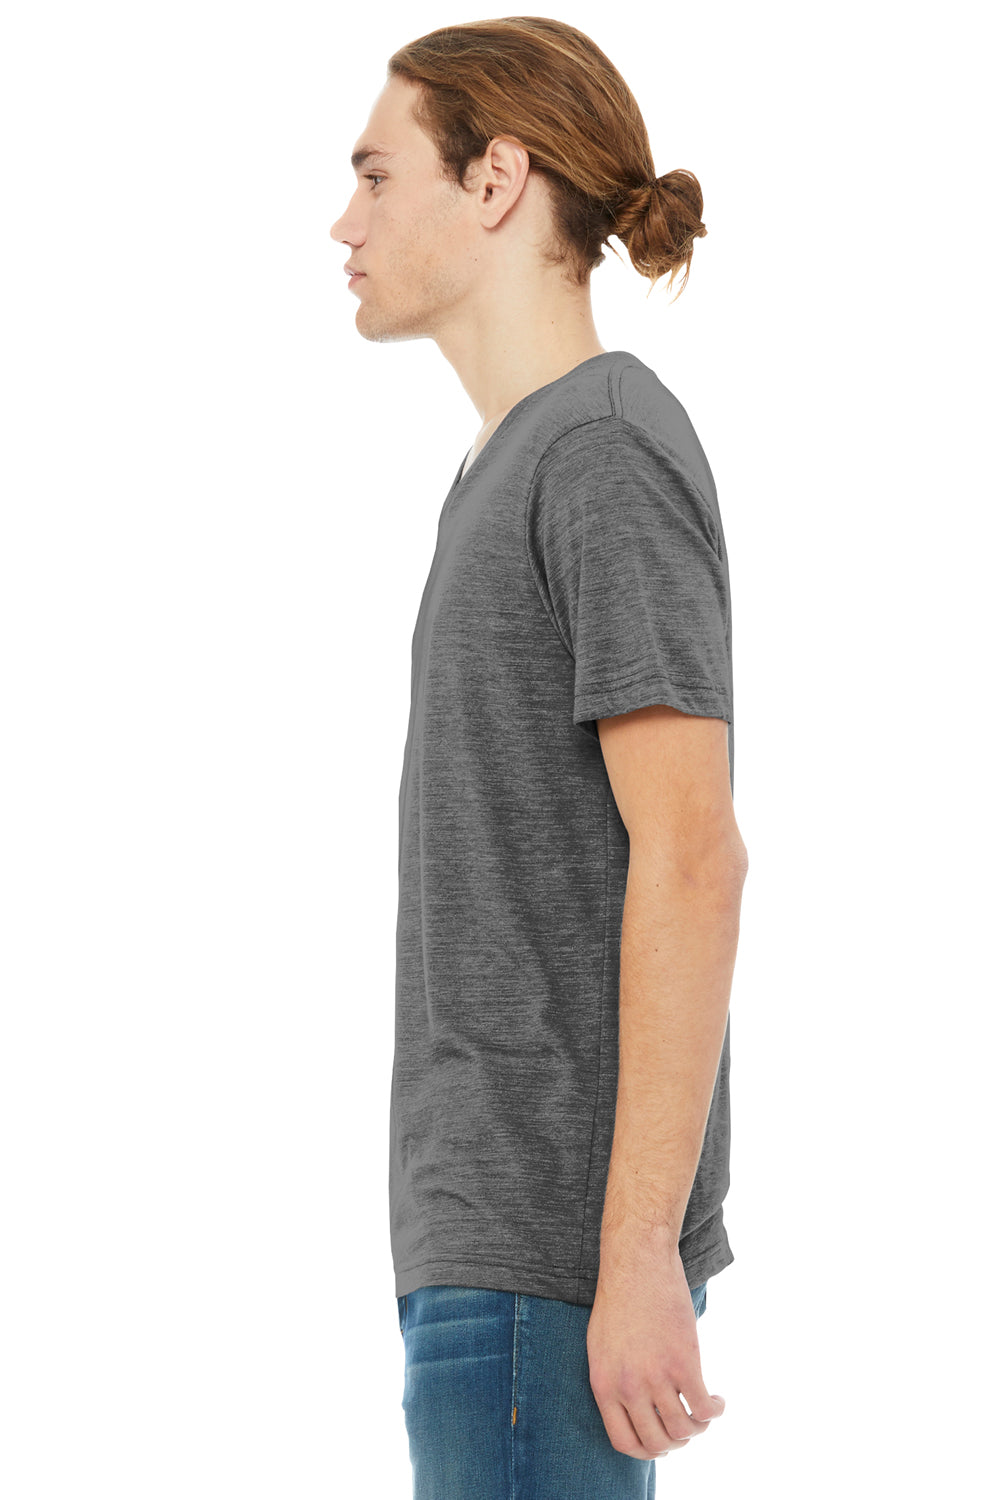 Bella + Canvas BC3655/3655C Mens Textured Jersey Short Sleeve V-Neck T-Shirt Asphalt Grey Slub Model Side